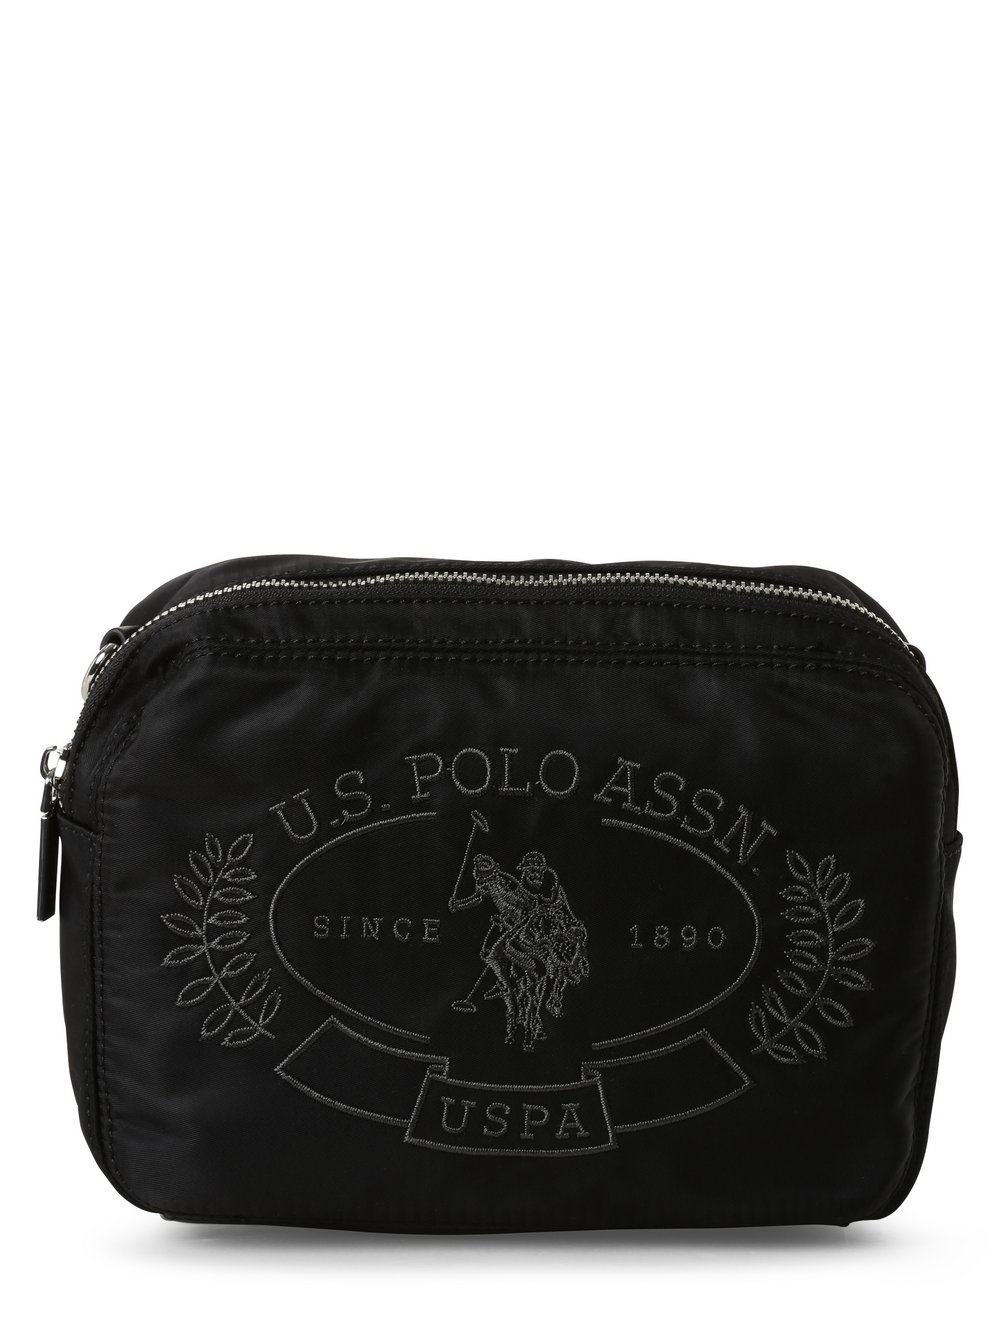 U.S. Polo Assn. - Damska torebka na ramię – Springfield, czarny